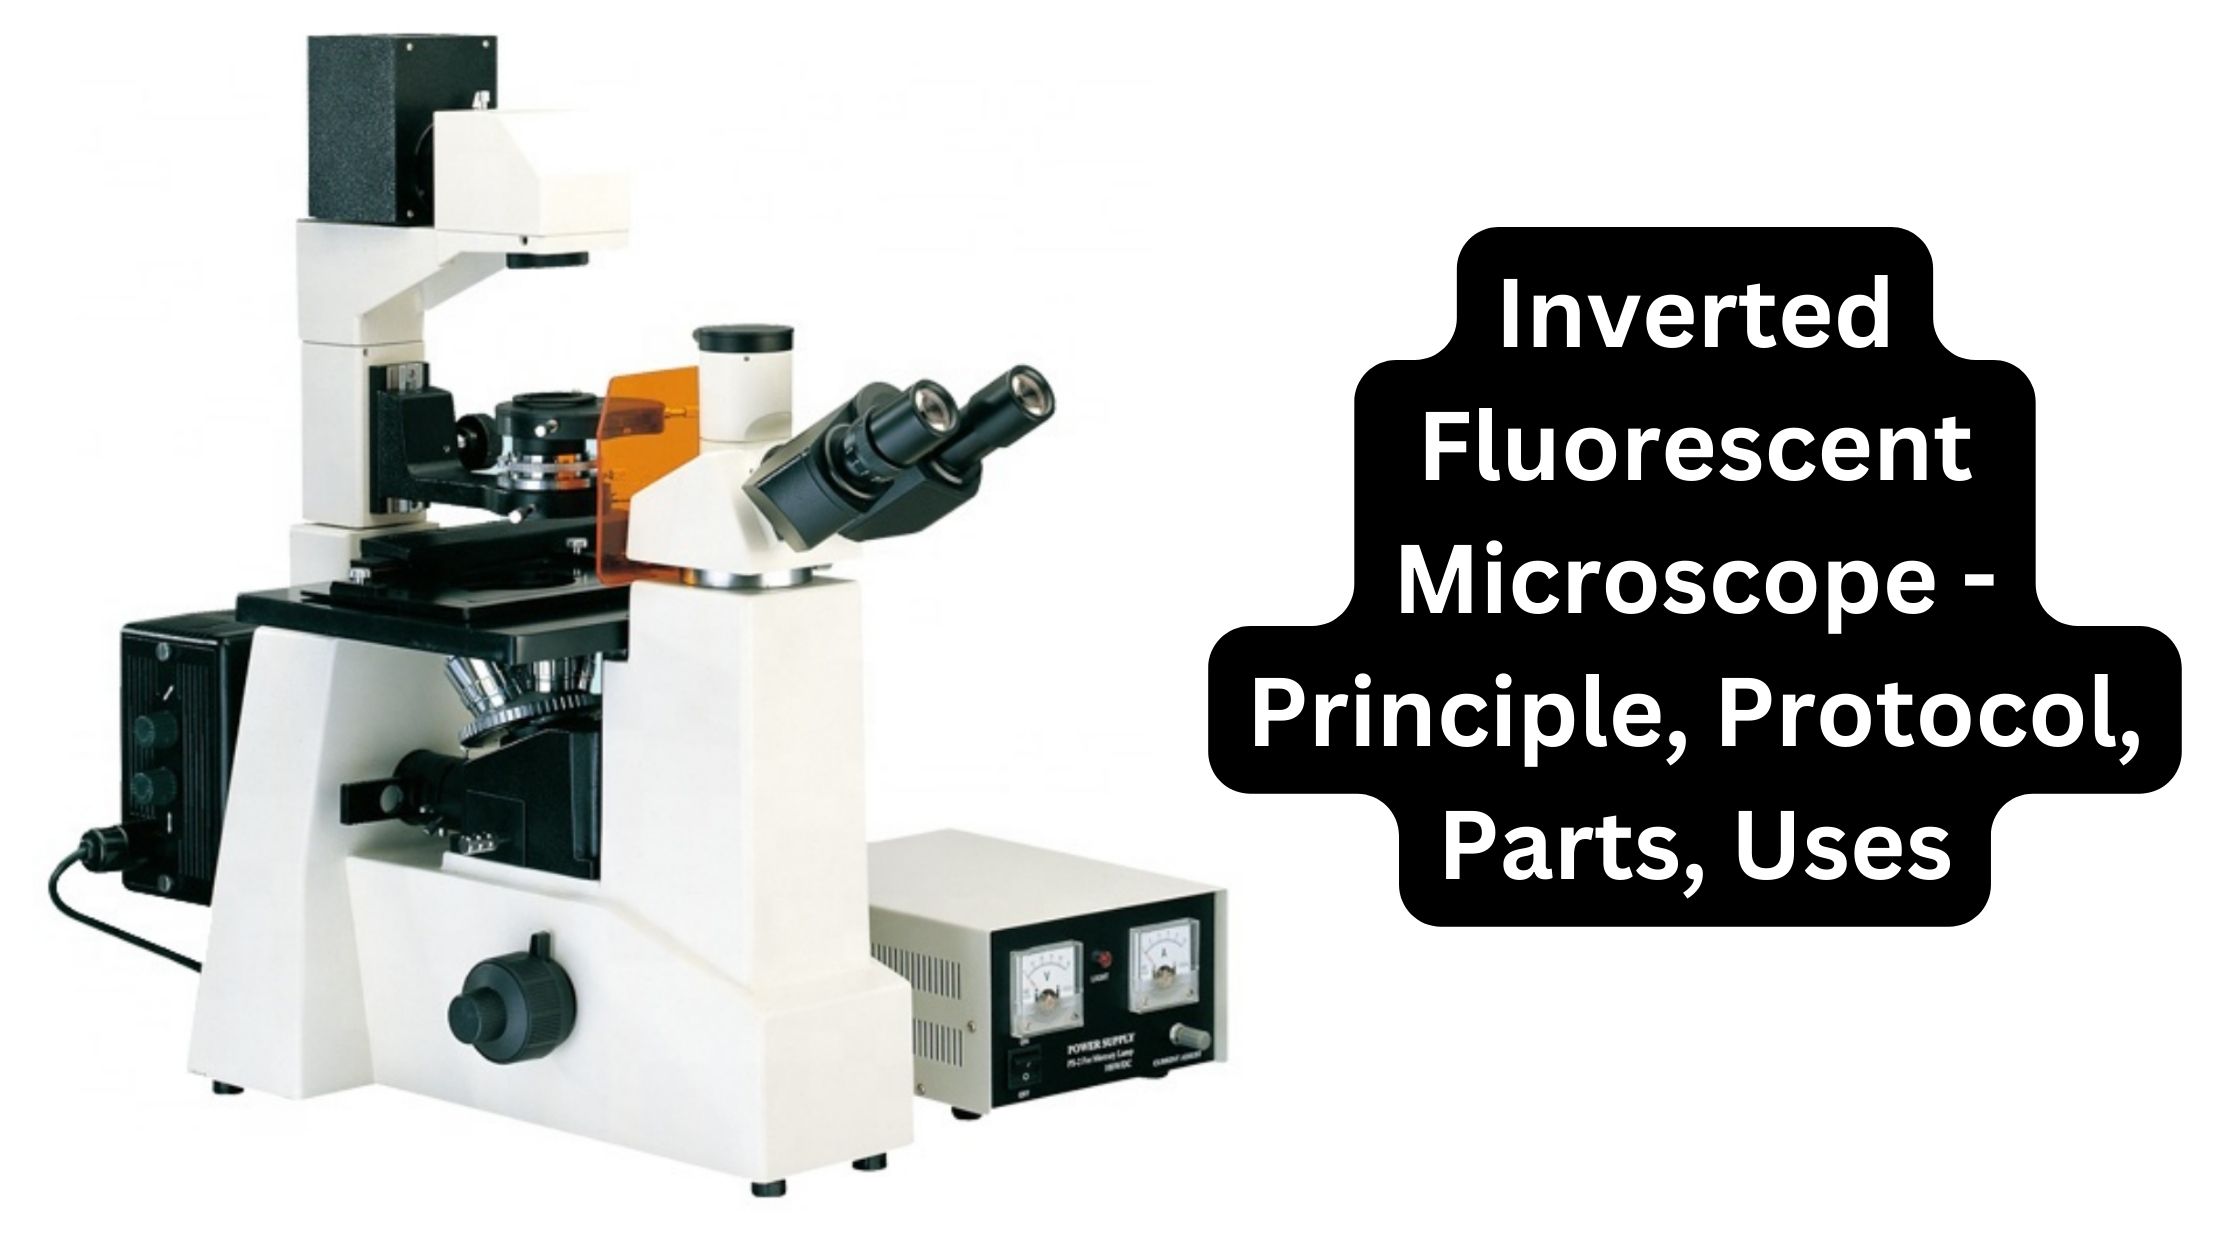 Inverted Fluorescent Microscope - Principle, Protocol, Parts, Uses